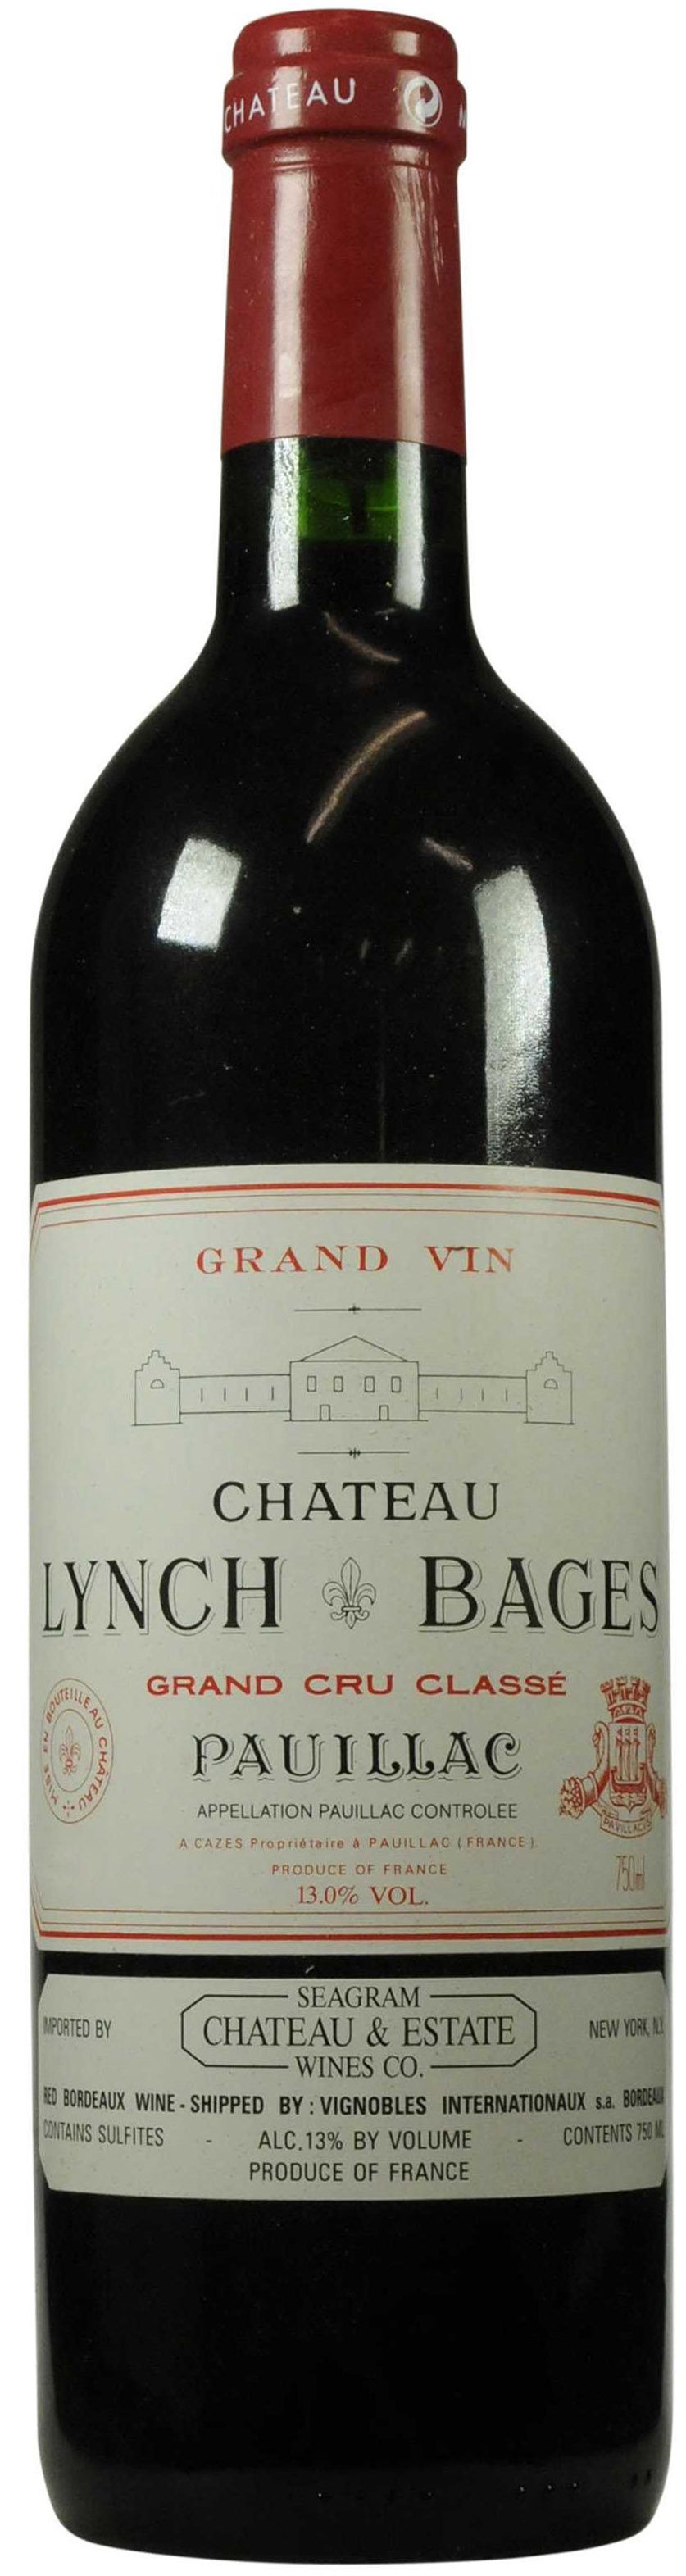 Chateau Lynch-Bages, Grand Cru Classe, 1996